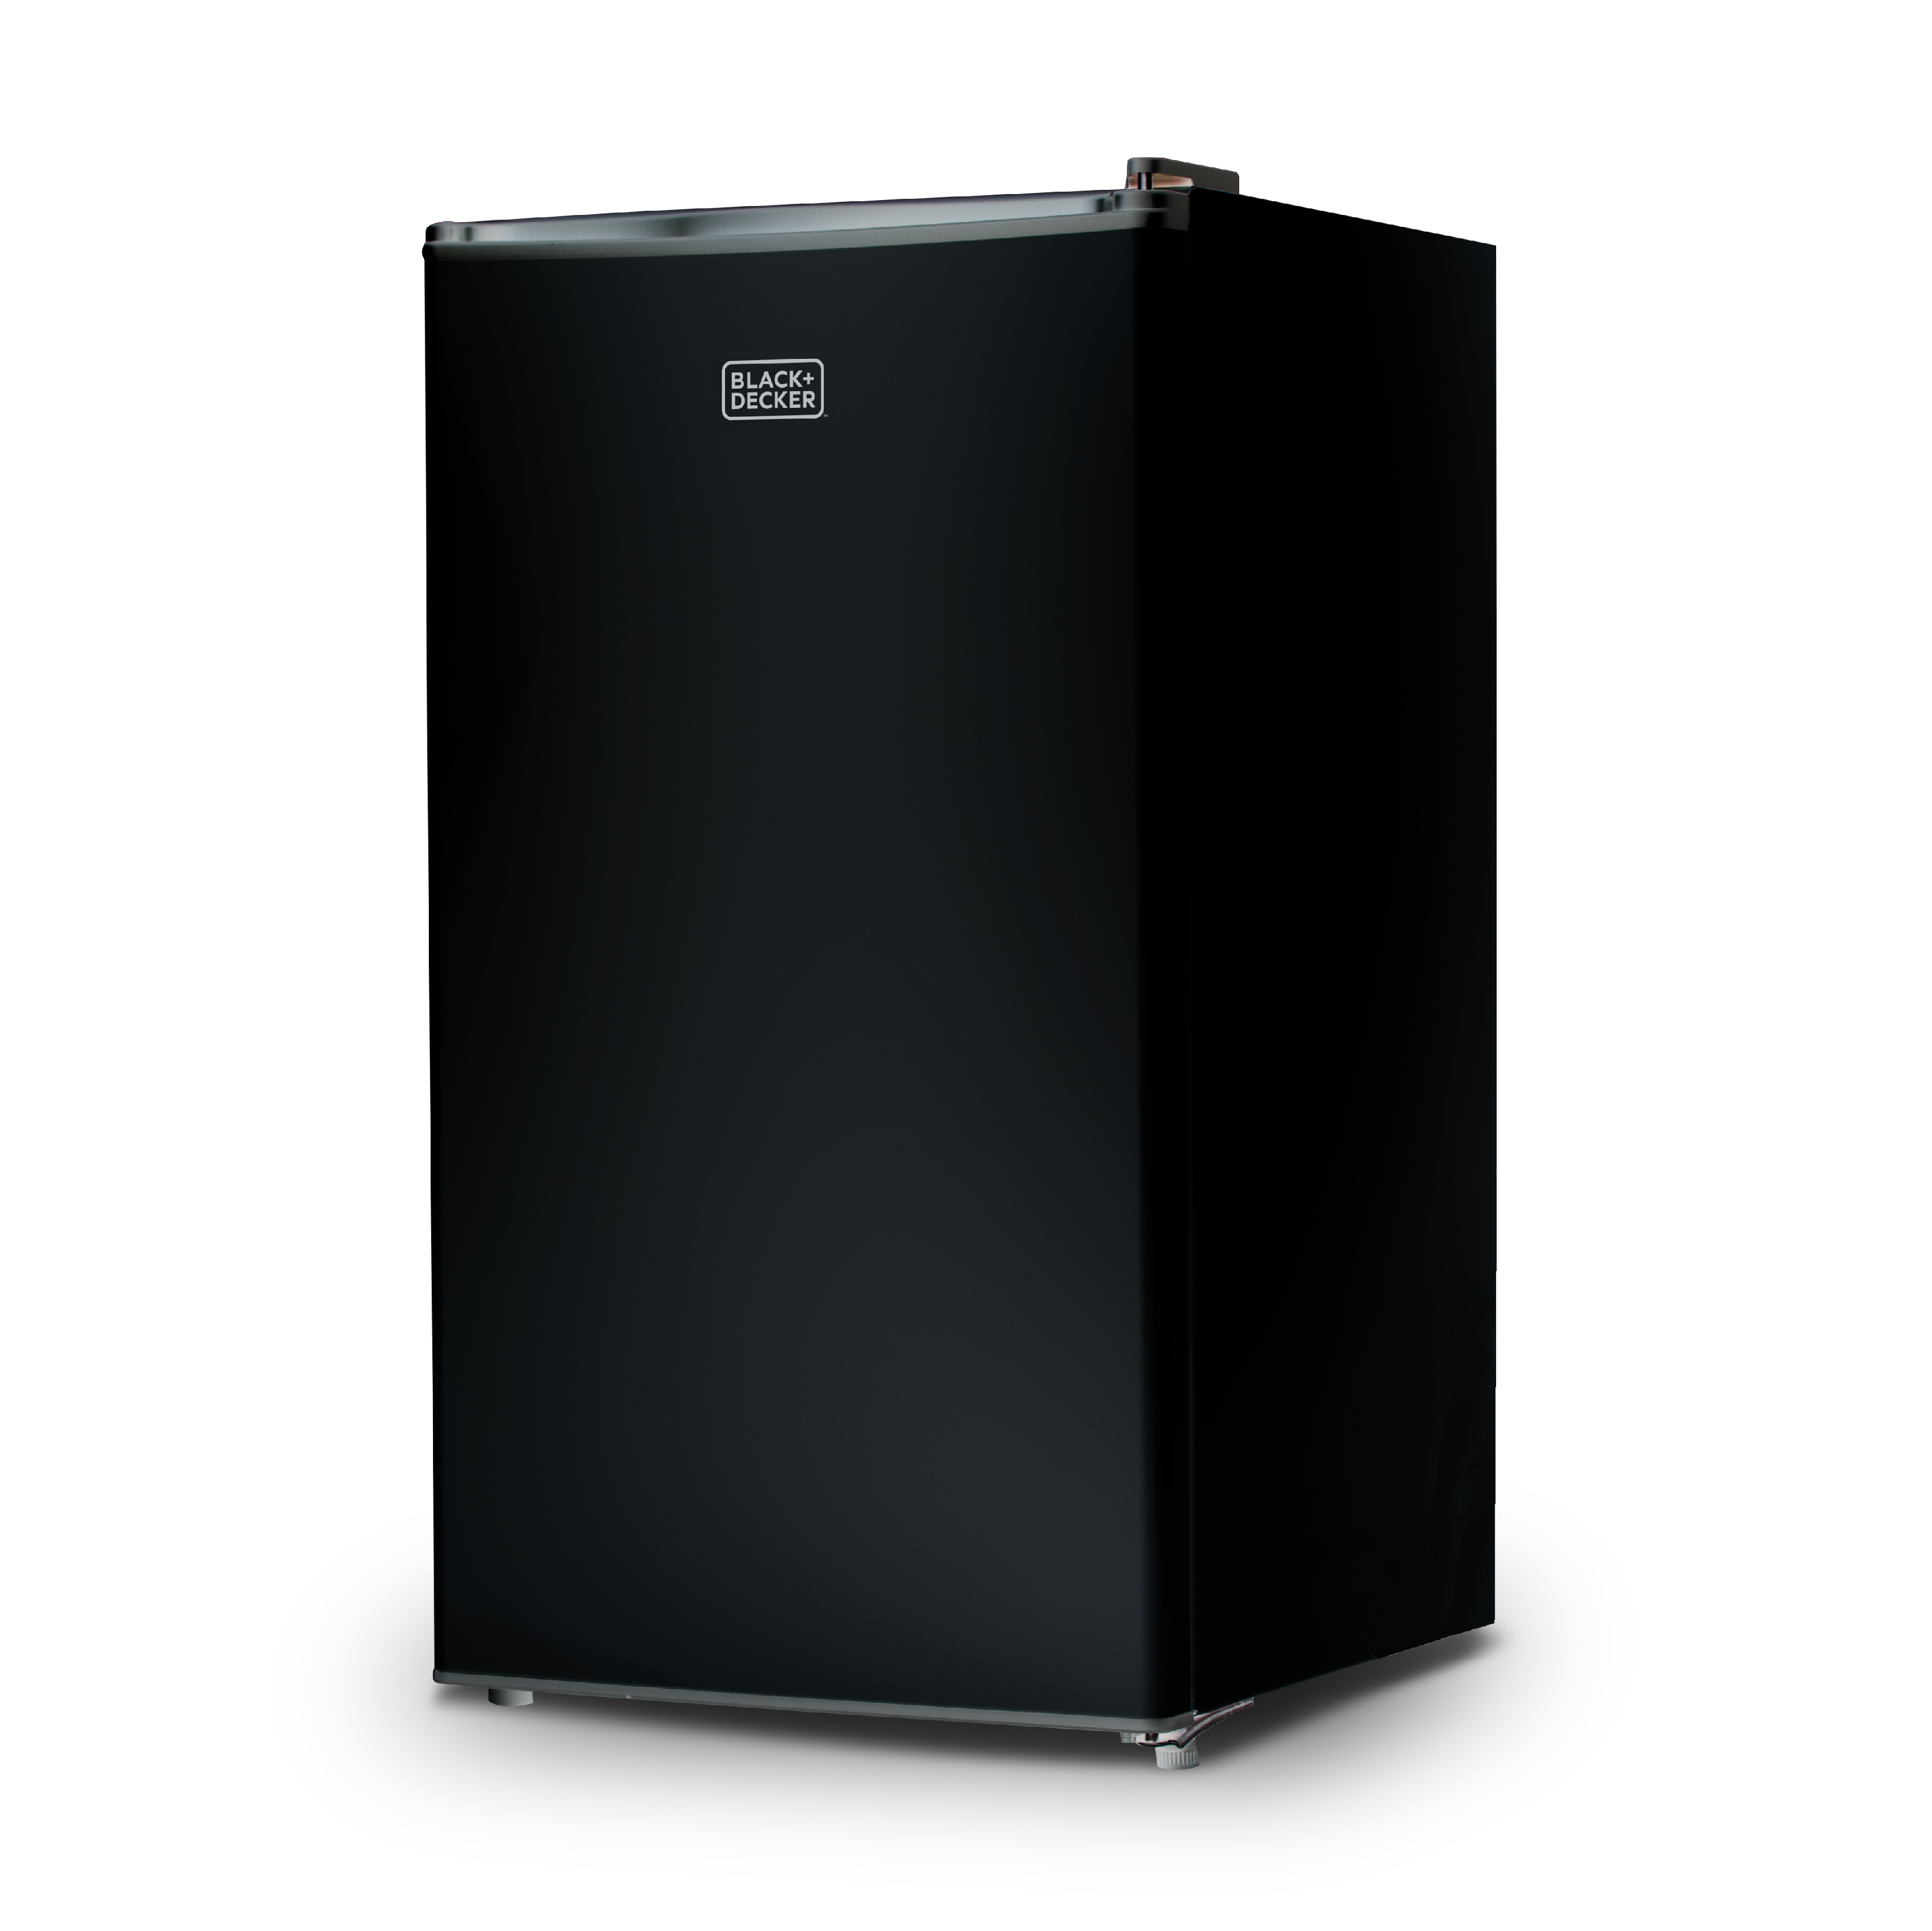 BLACK+DECKER BCRK32B Compact Refrigerator & Mini Fridge with Freezer, 3.2 cu. ft., Black - image 1 of 7